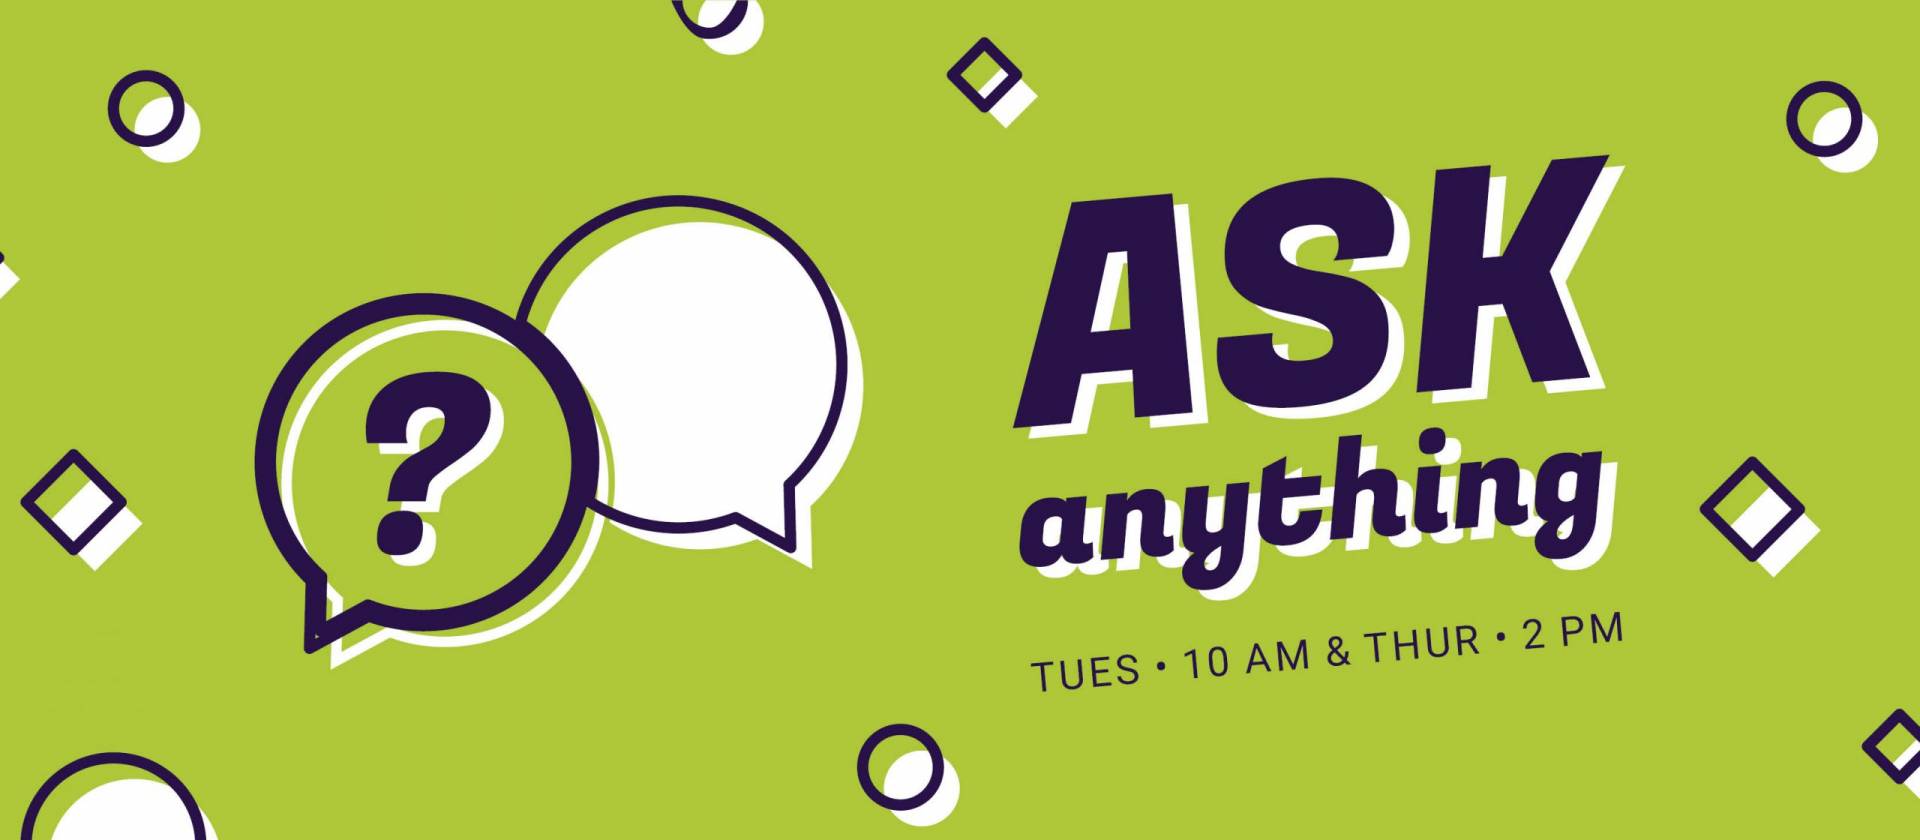 Ask Anything, Tuesdays at 10 AM & Thursdays at 2 PM